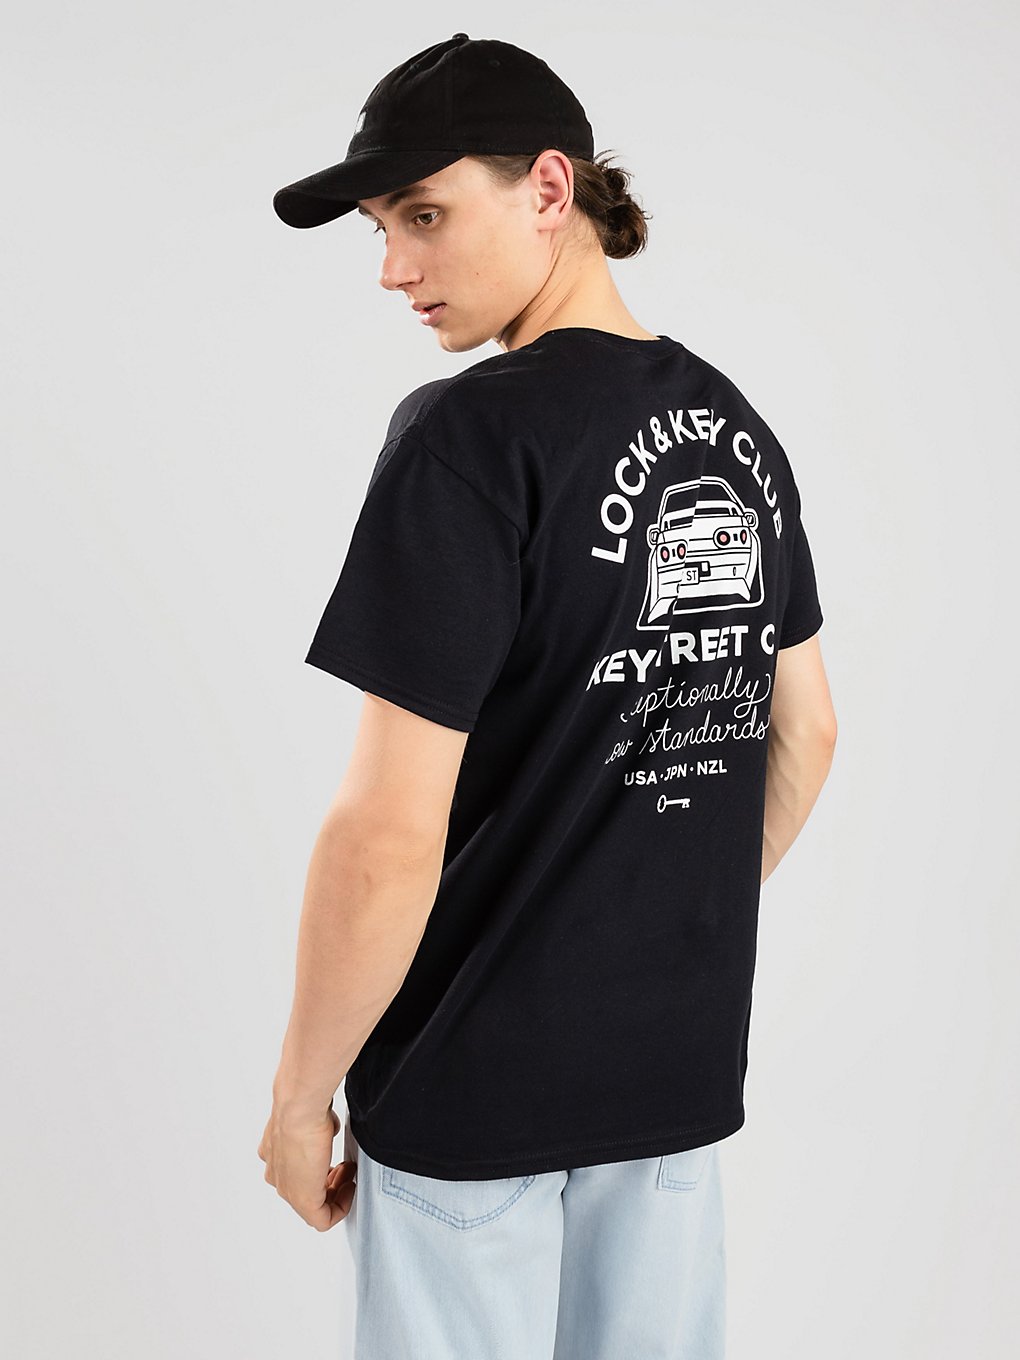 Key Street Car Club T-Shirt zwart